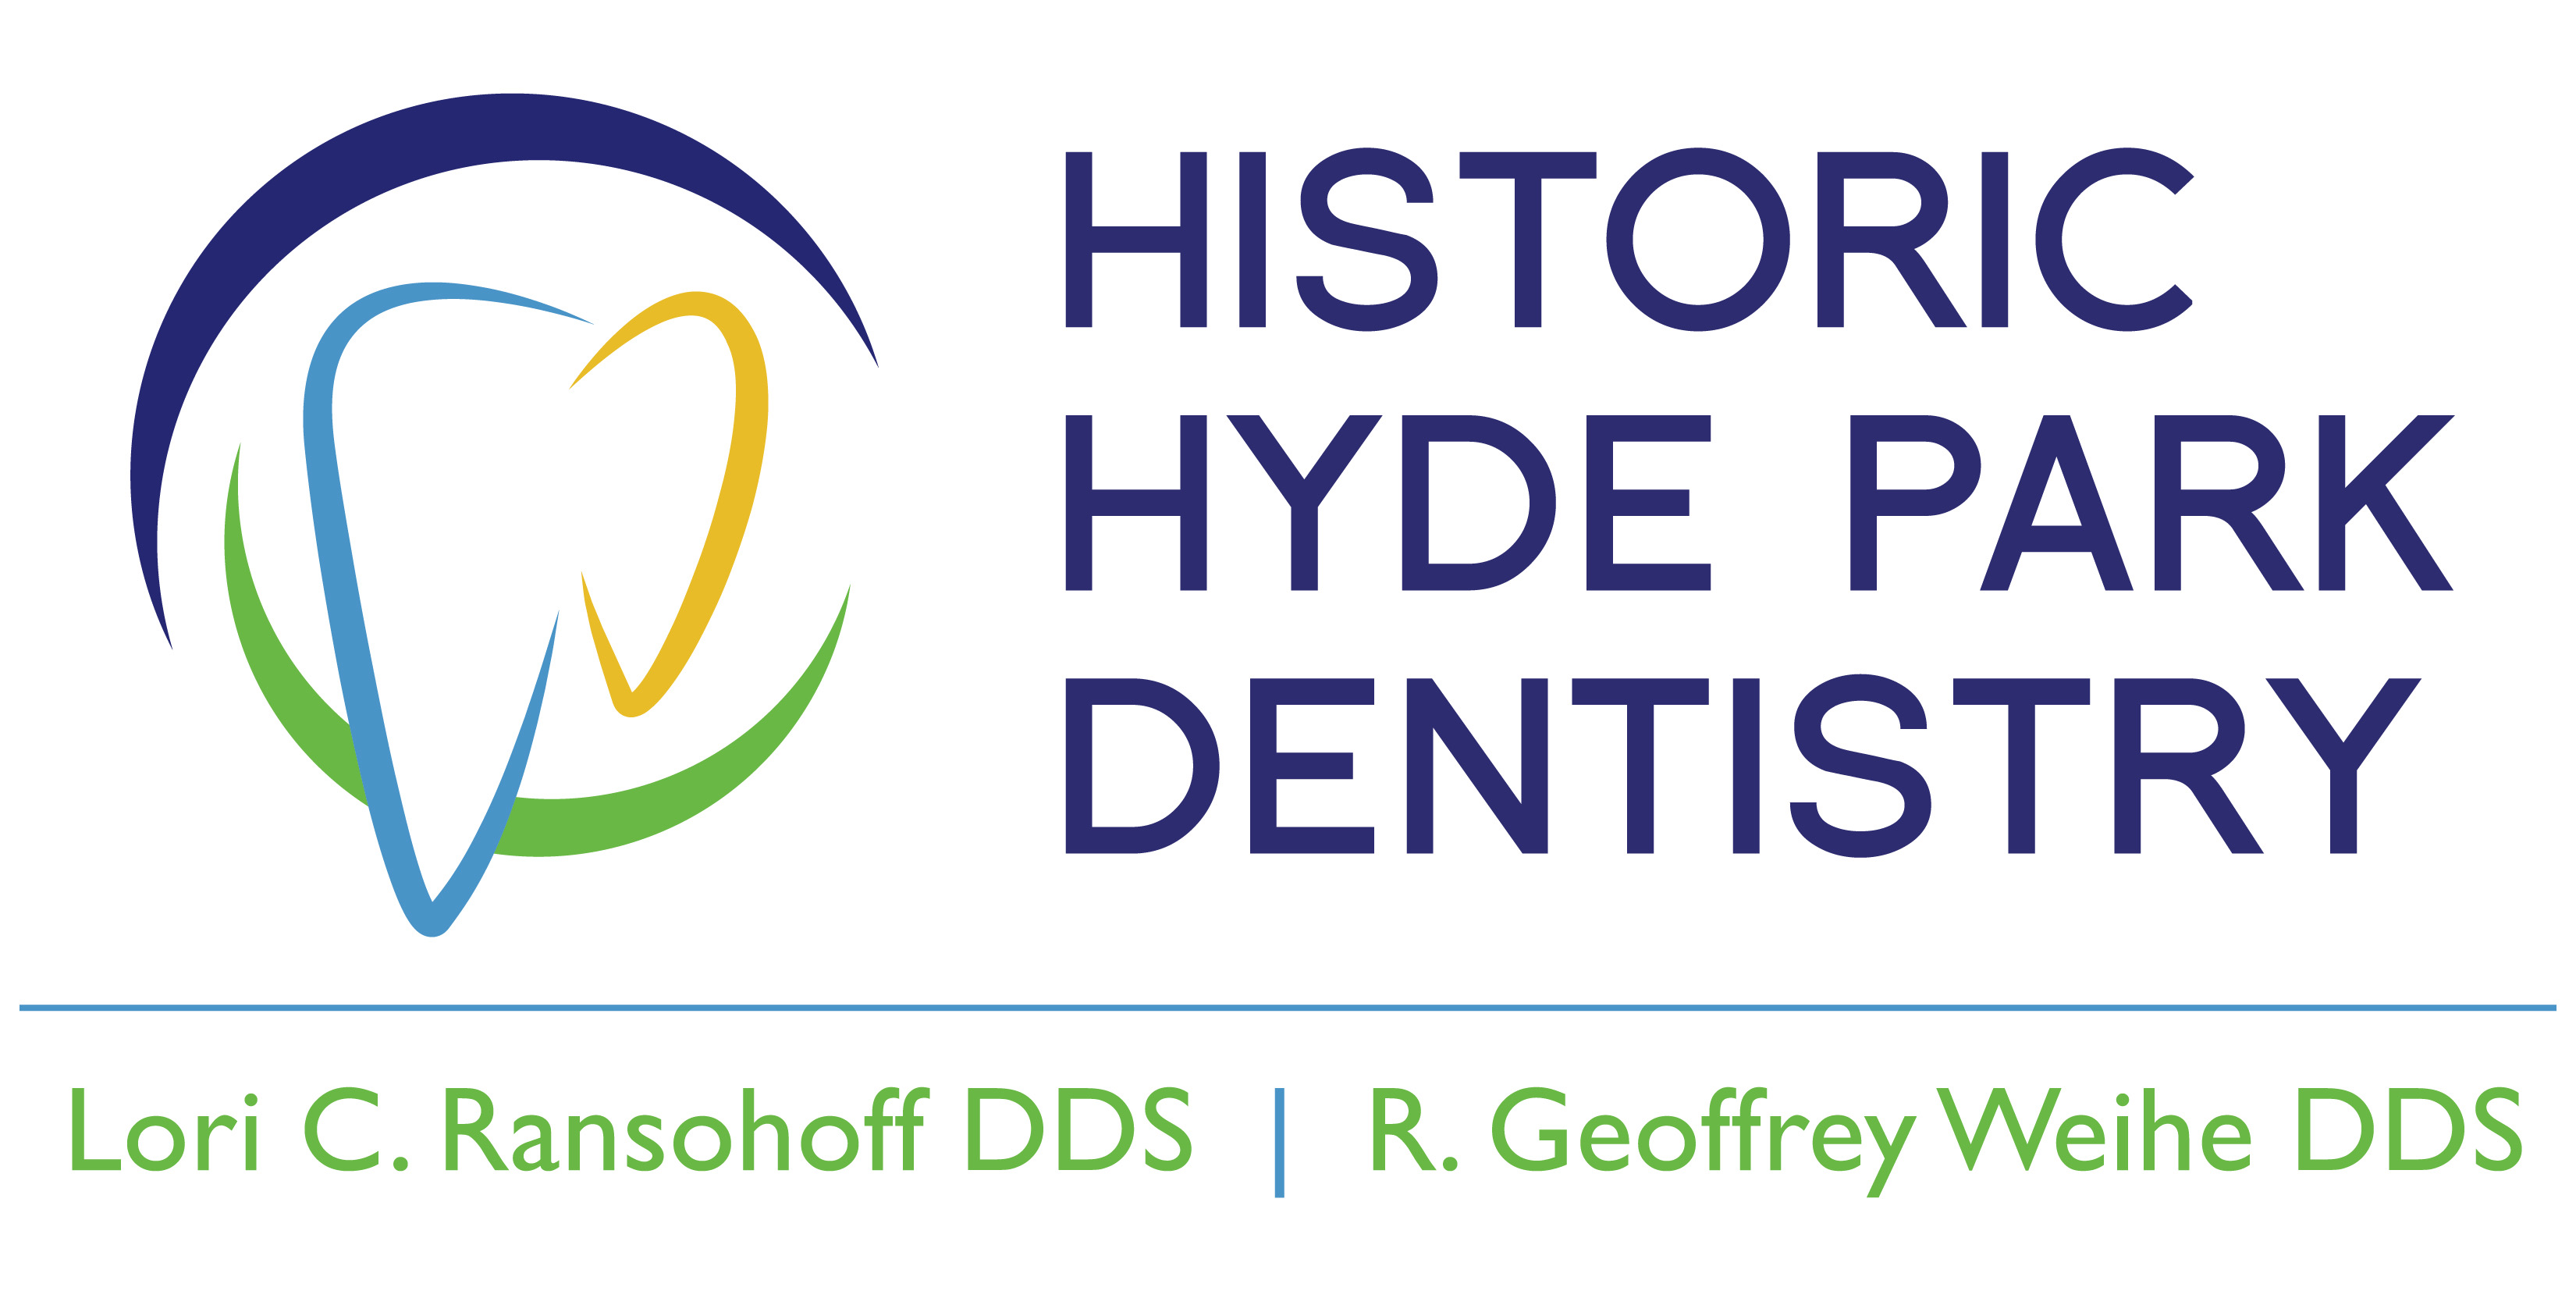 Historic Hyde Park Dentistry: Lori C. Ransohoff, DDS's Logo